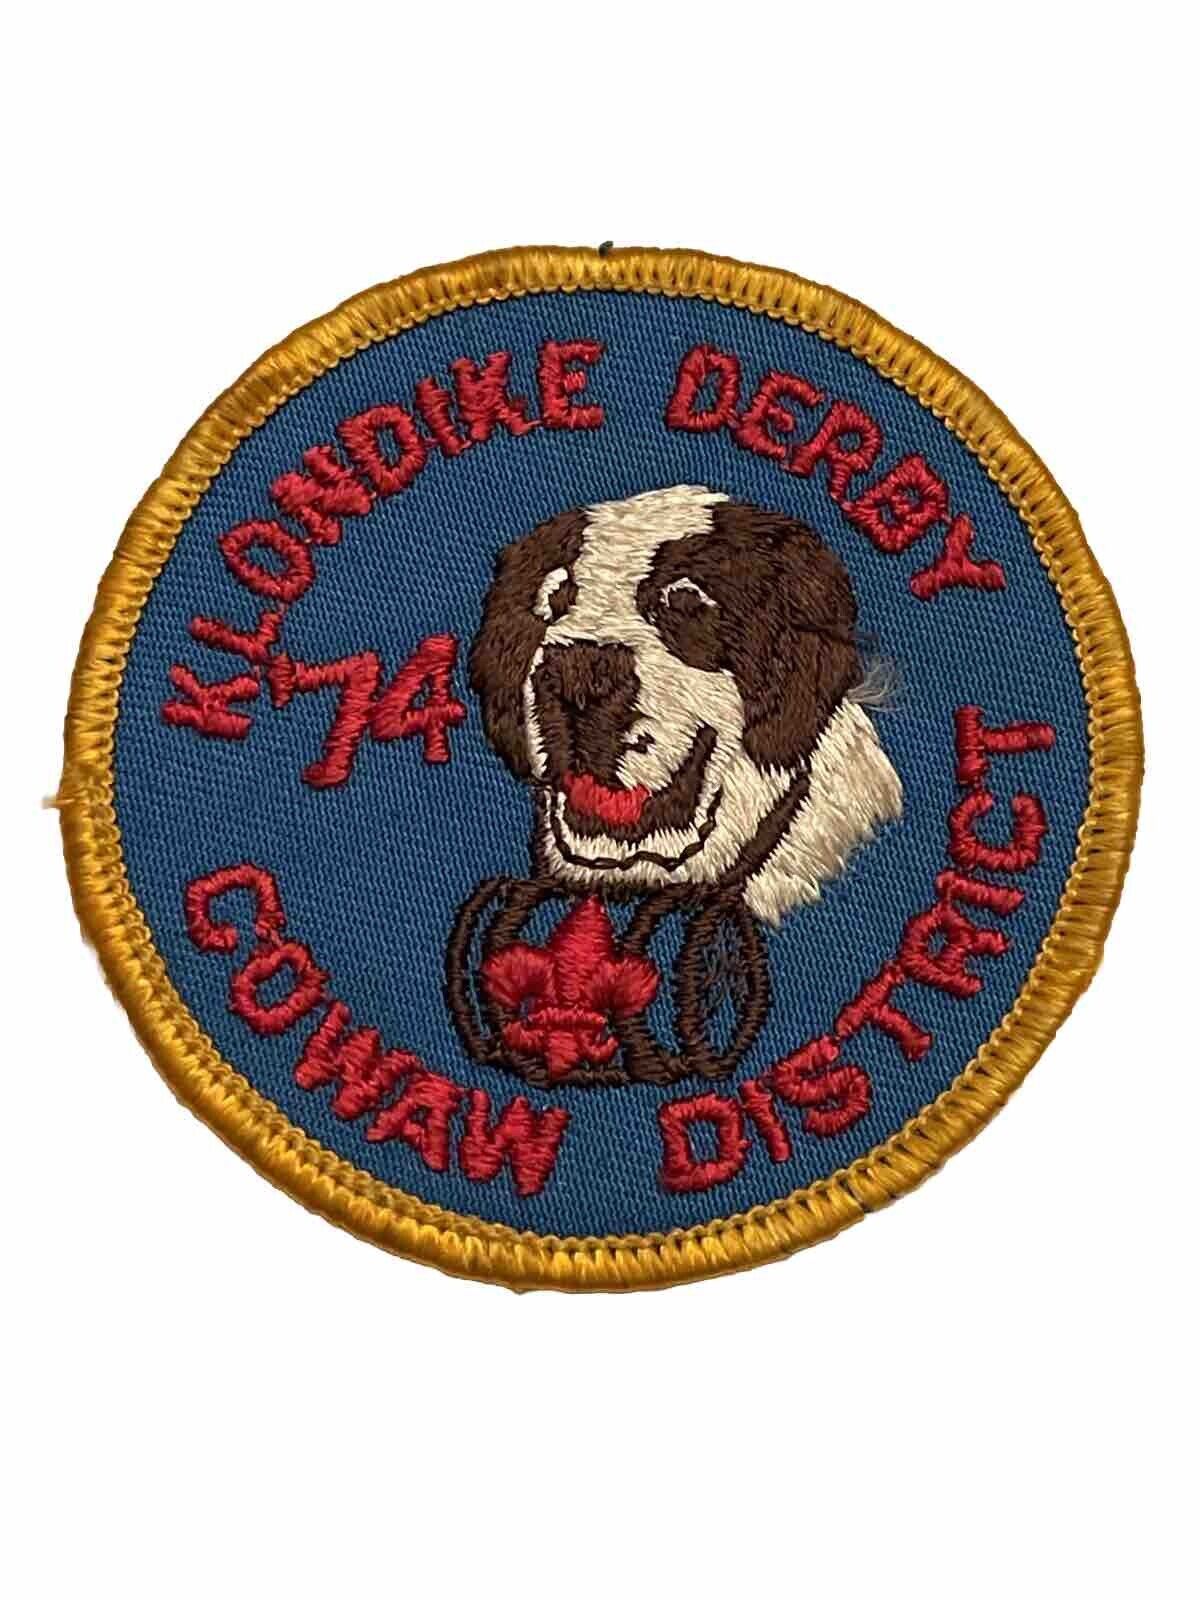 Cowaw District Patch 1974 Klondike Derby BSA Boy Scouts Of America Badge Emblem